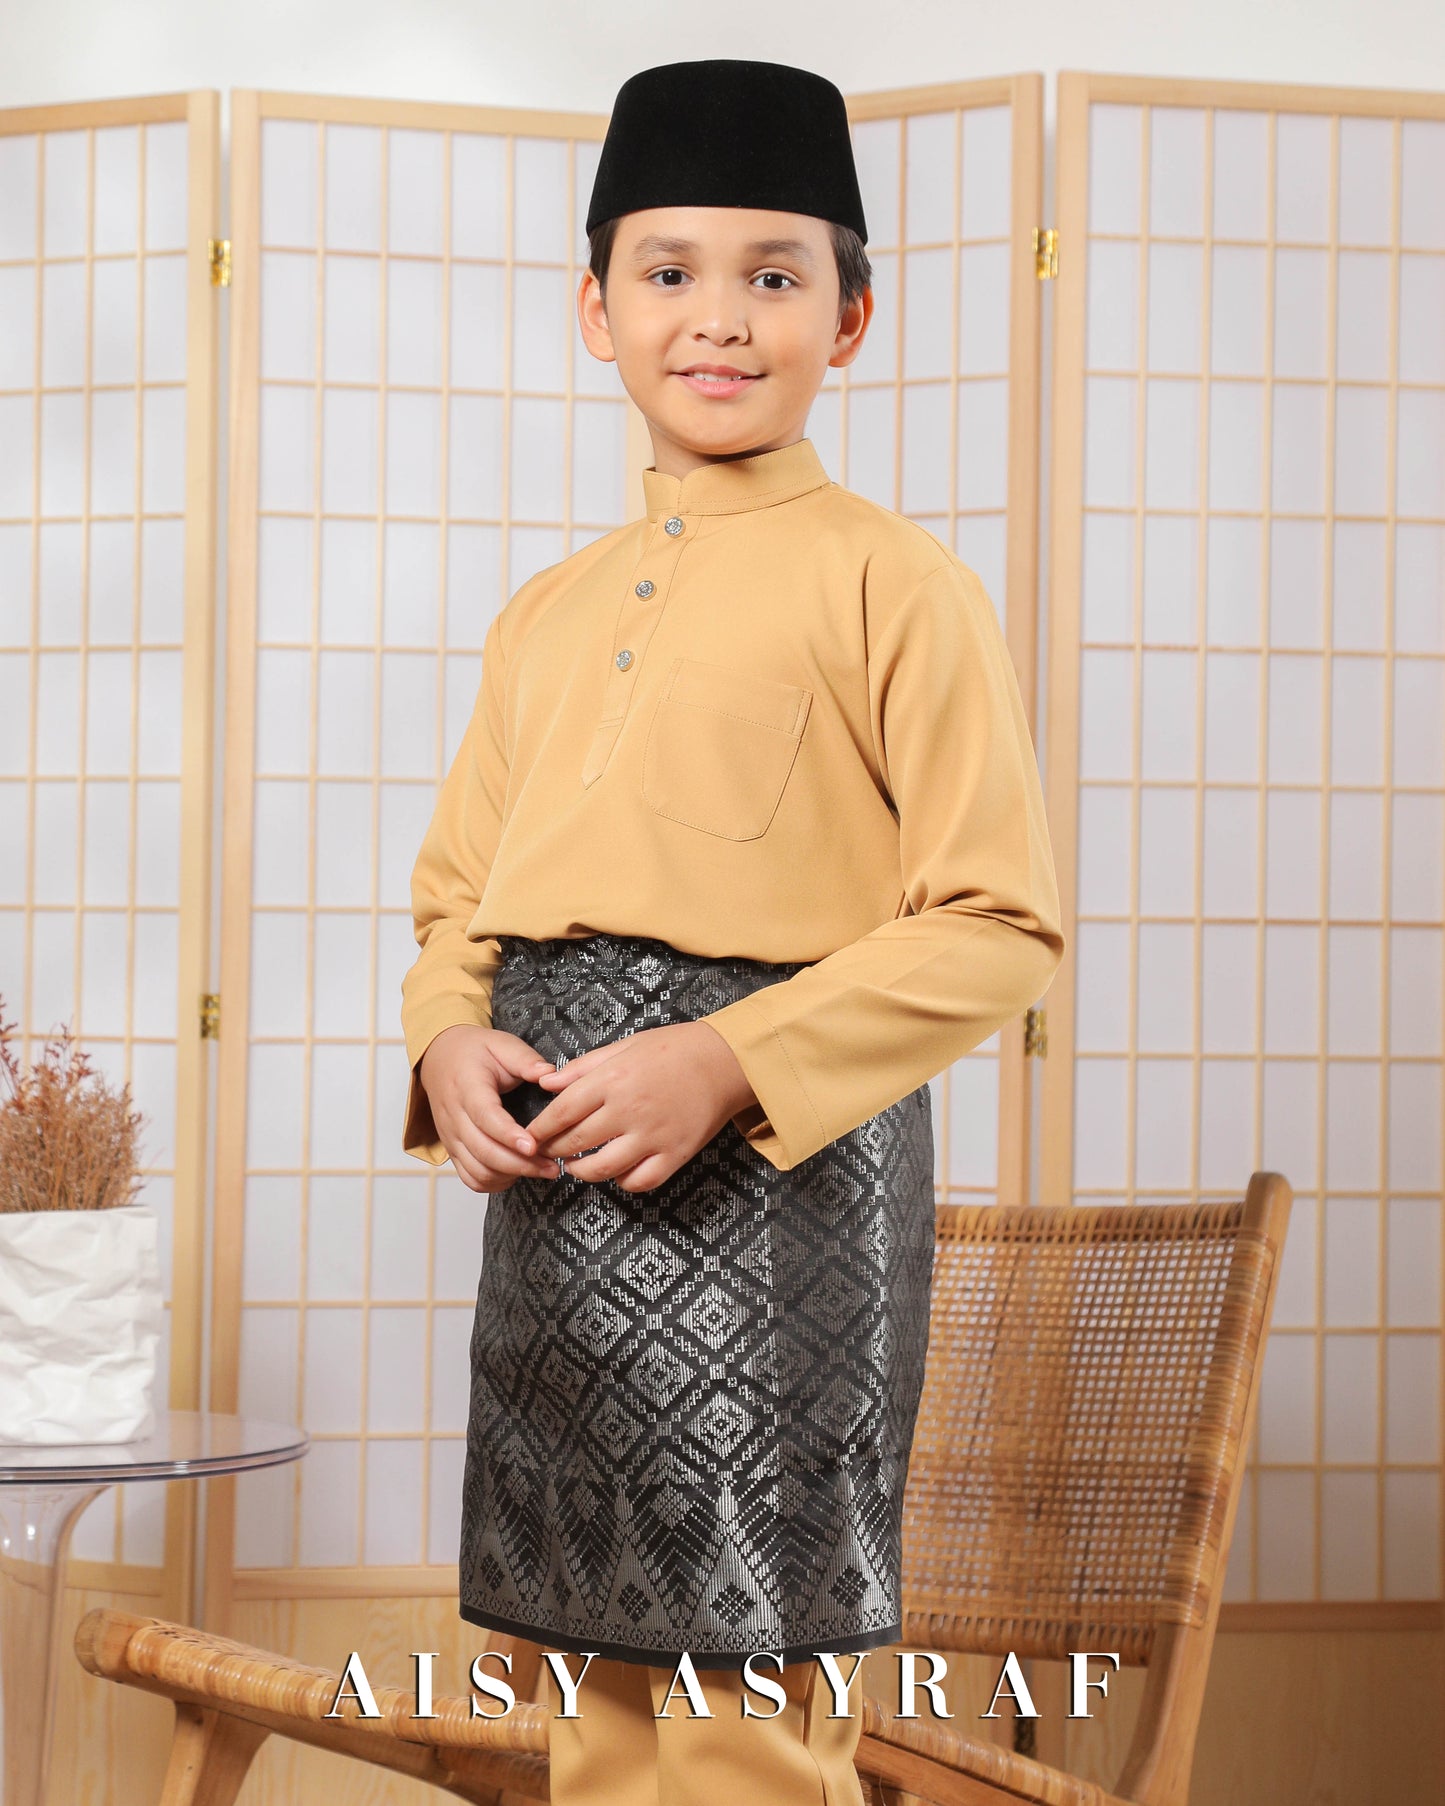 Baju Melayu Zaidan Kids - Honey Mustard